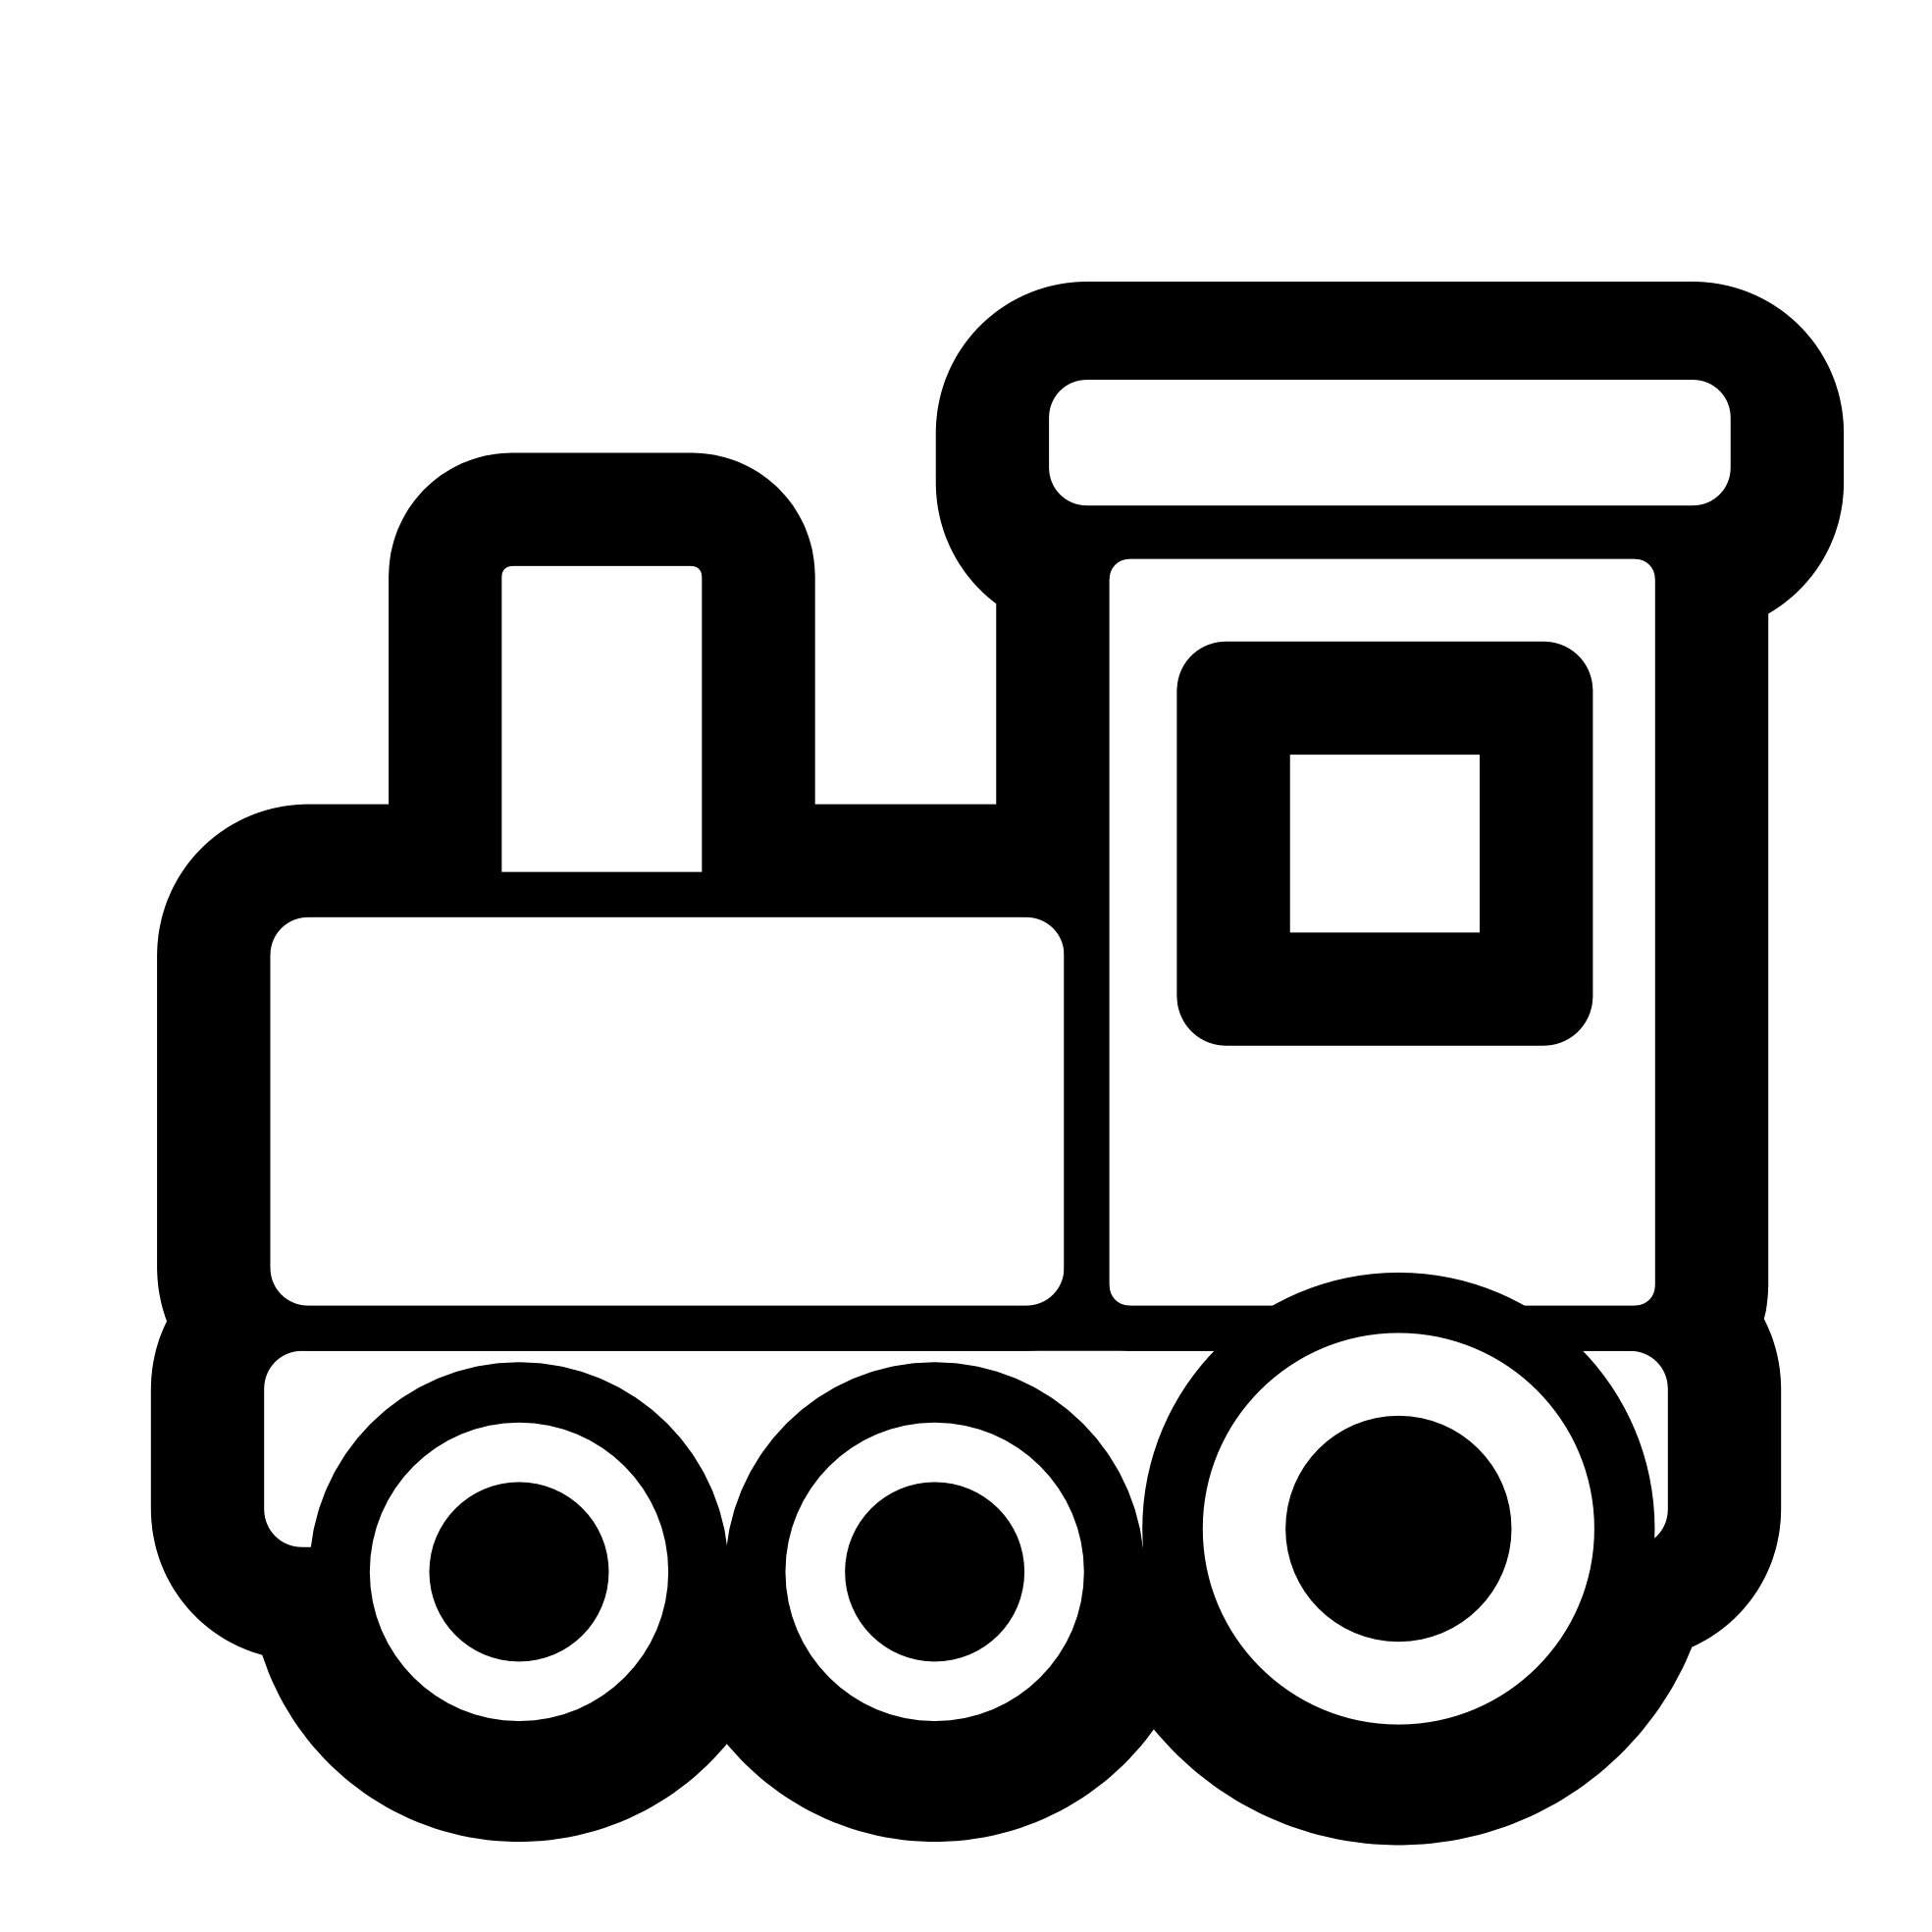 Train Engine Black And White Clipart